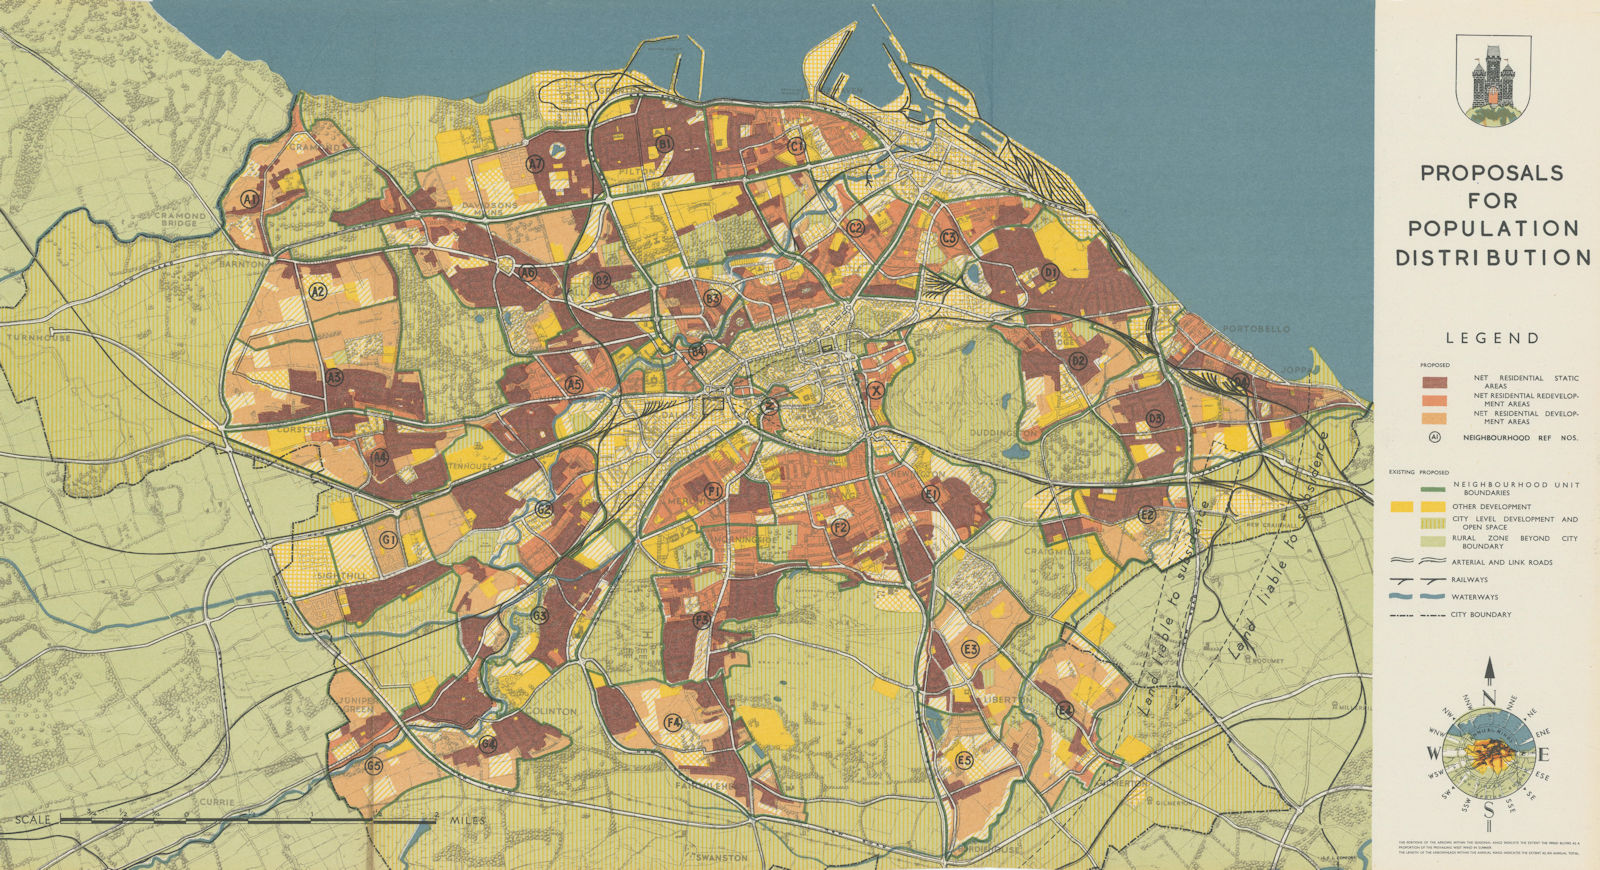 EDINBURGH. Proposals for Population Distribution. PATRICK ABERCROMBIE 1949 map